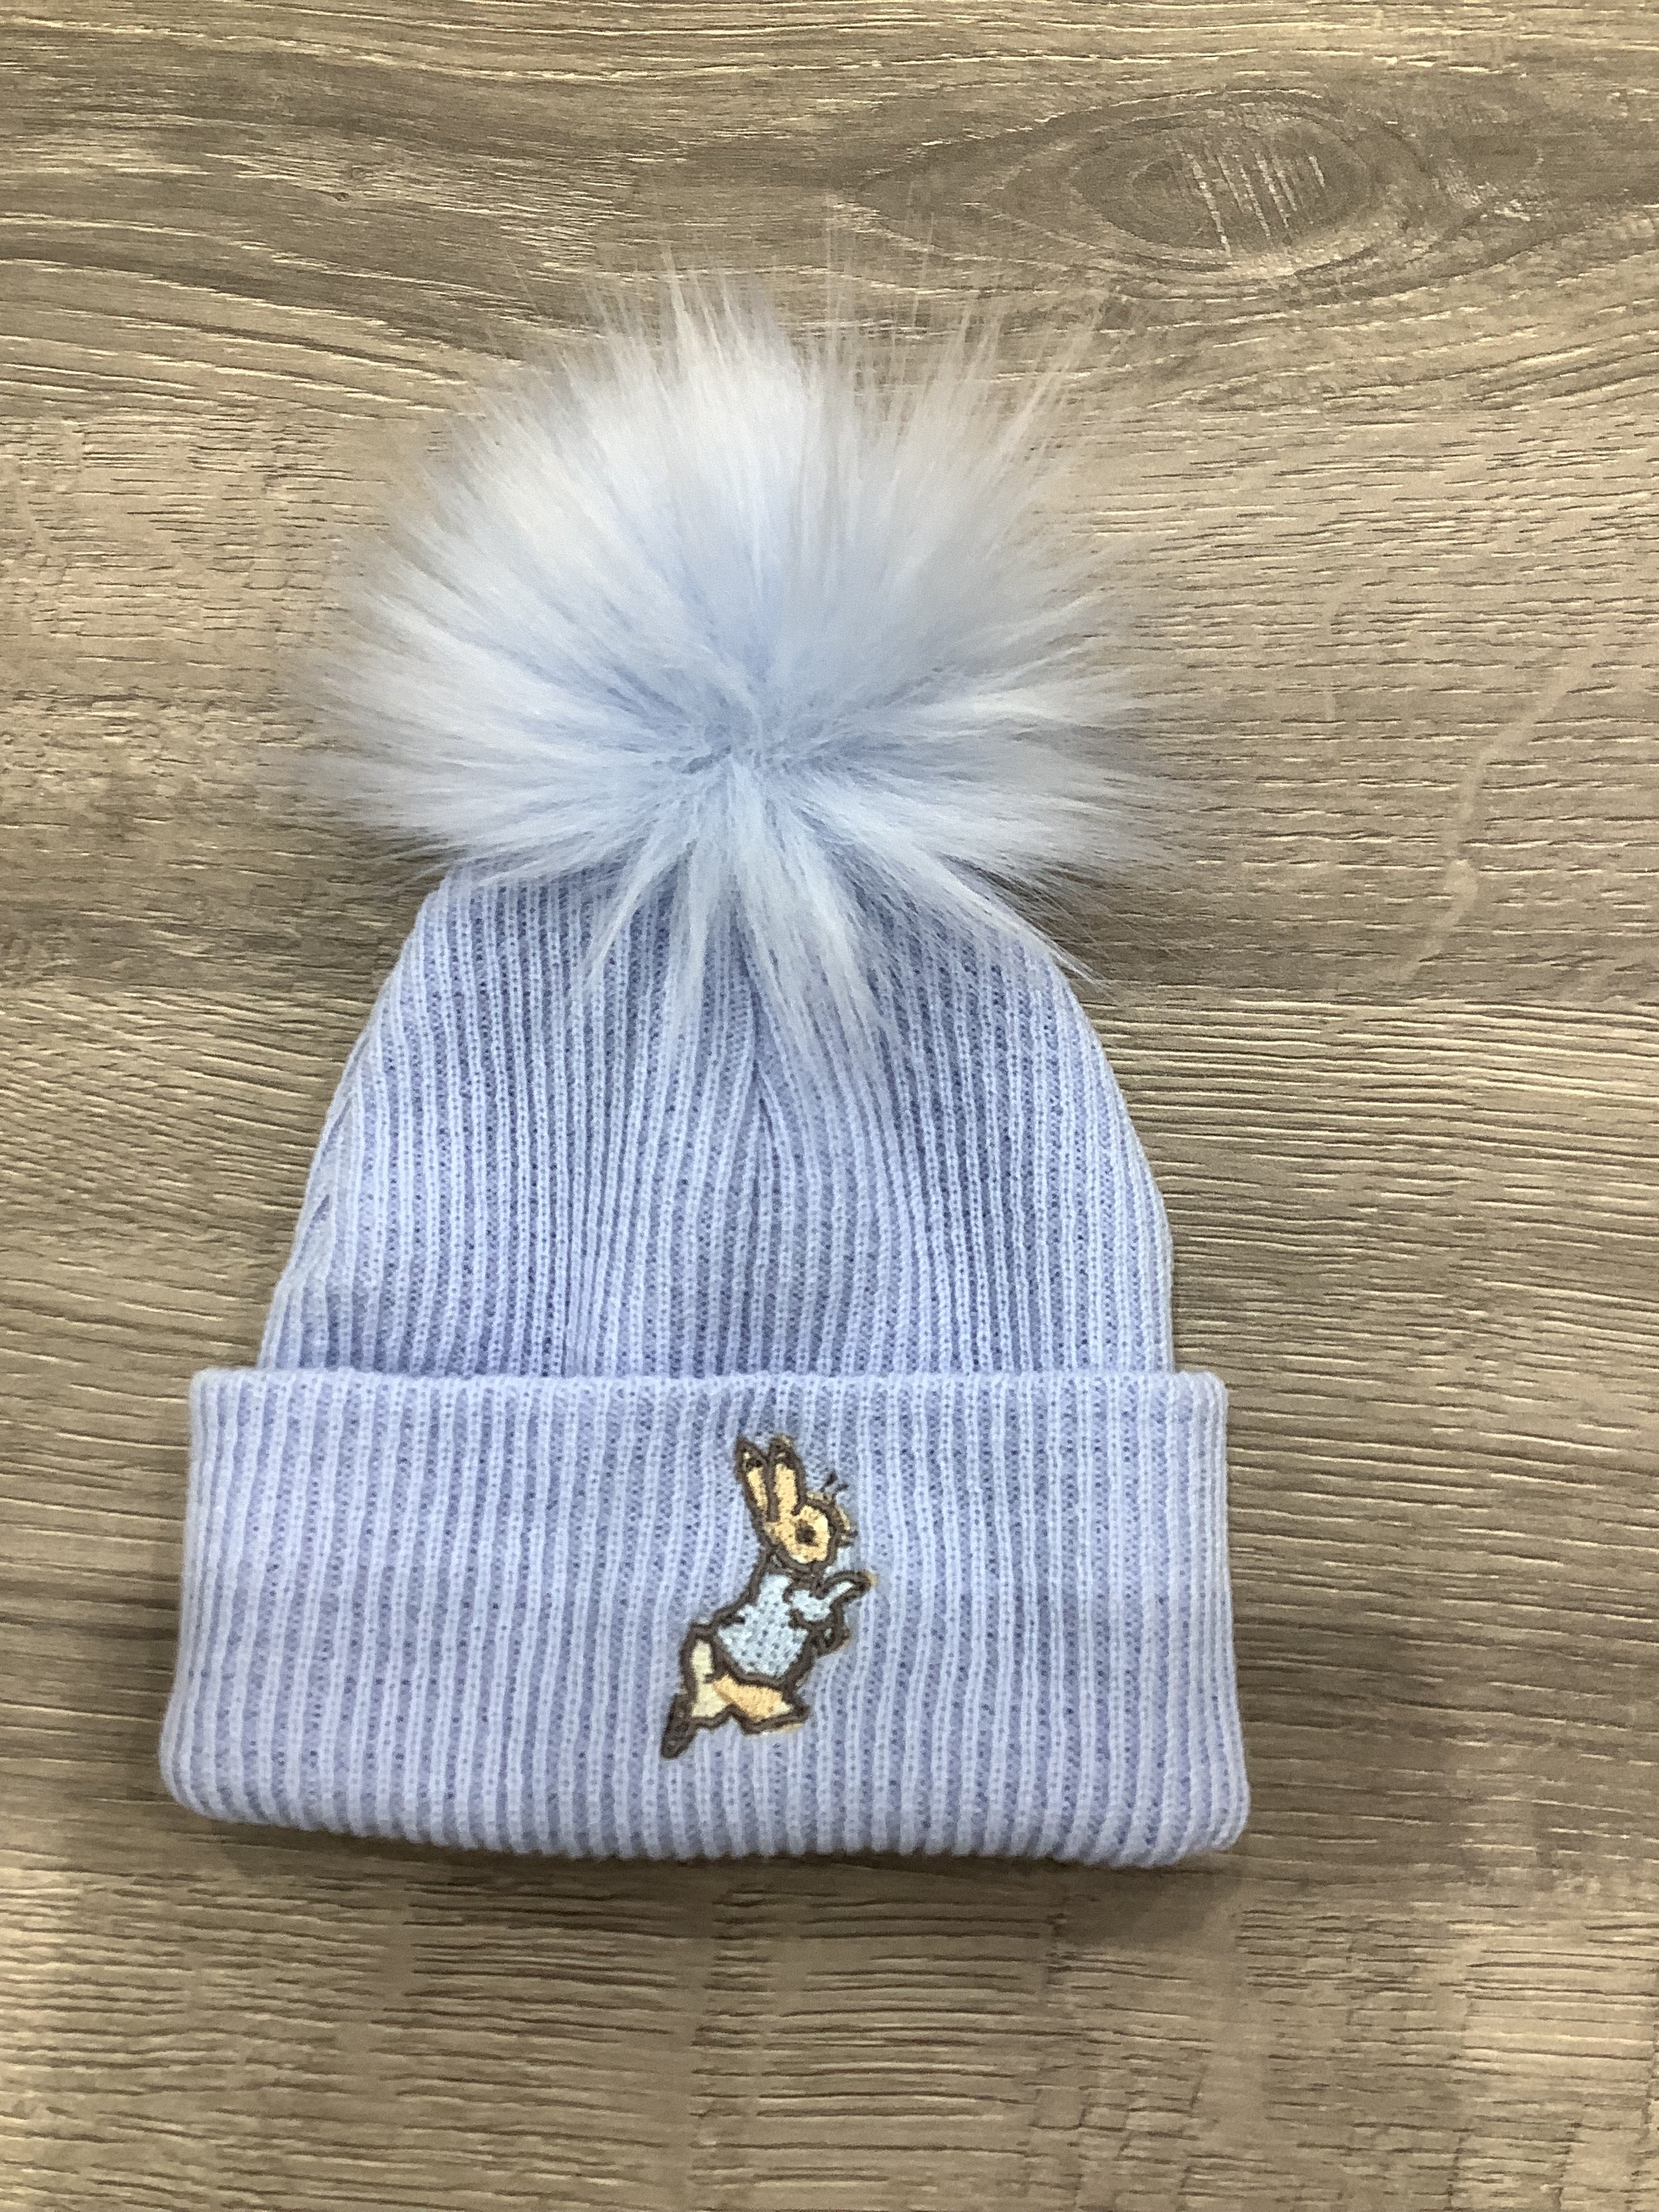 Size 2 single turn up fur pom pom Hat Blue  Peter Rabbit 6 - 12 Months